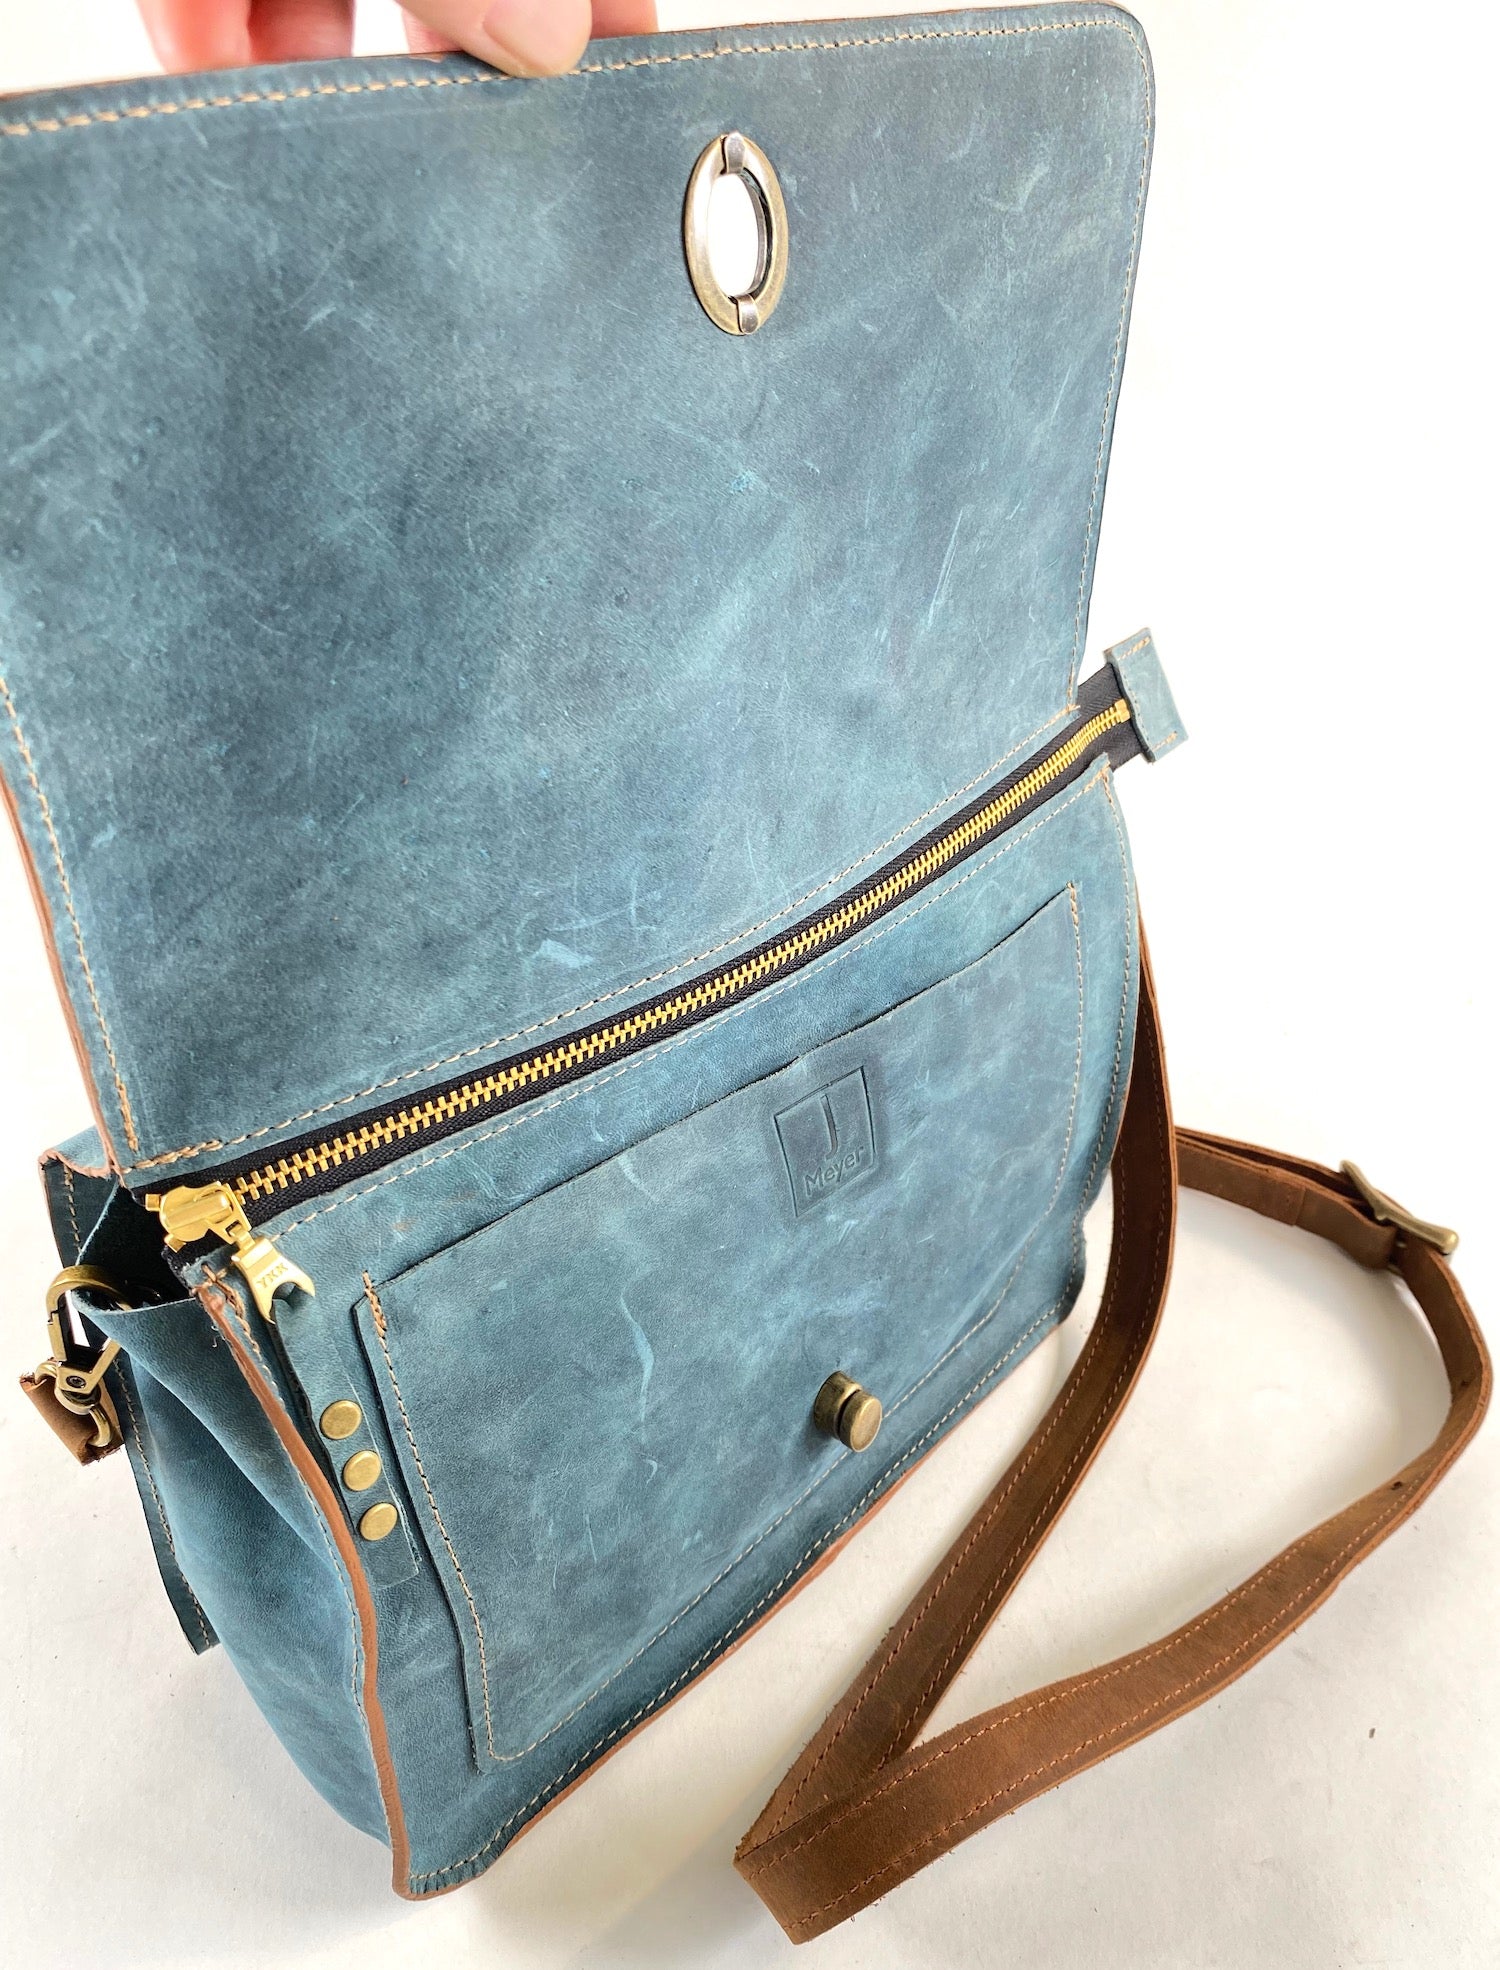 Rodéo pégase leather bag charm Hermès Blue in Leather - 35984463